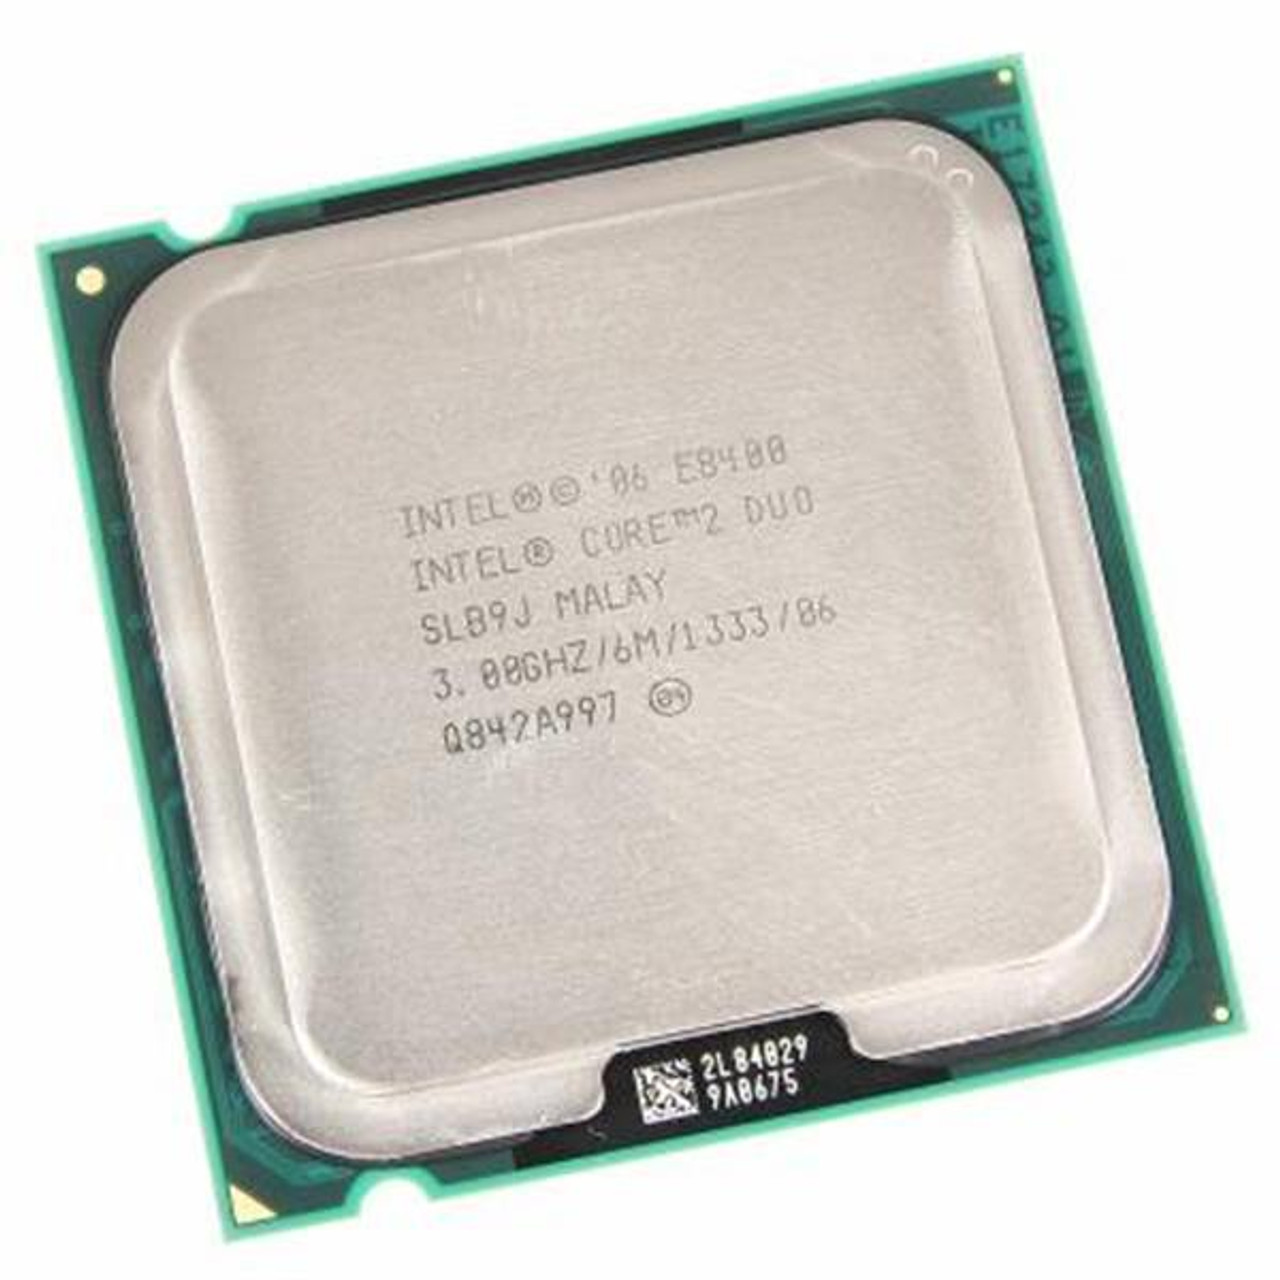 Интел коре 8400. Процессор Intel Core 2 Duo e8400 lga775, 2 x 3000 МГЦ, OEM. Процессор Intel Core 2 Duo e8190 Wolfdale. Процессор: Intel Core 2 Duo 2.4 GHZ. Intel Core 2 Duo e8400-3.8 MHZ.